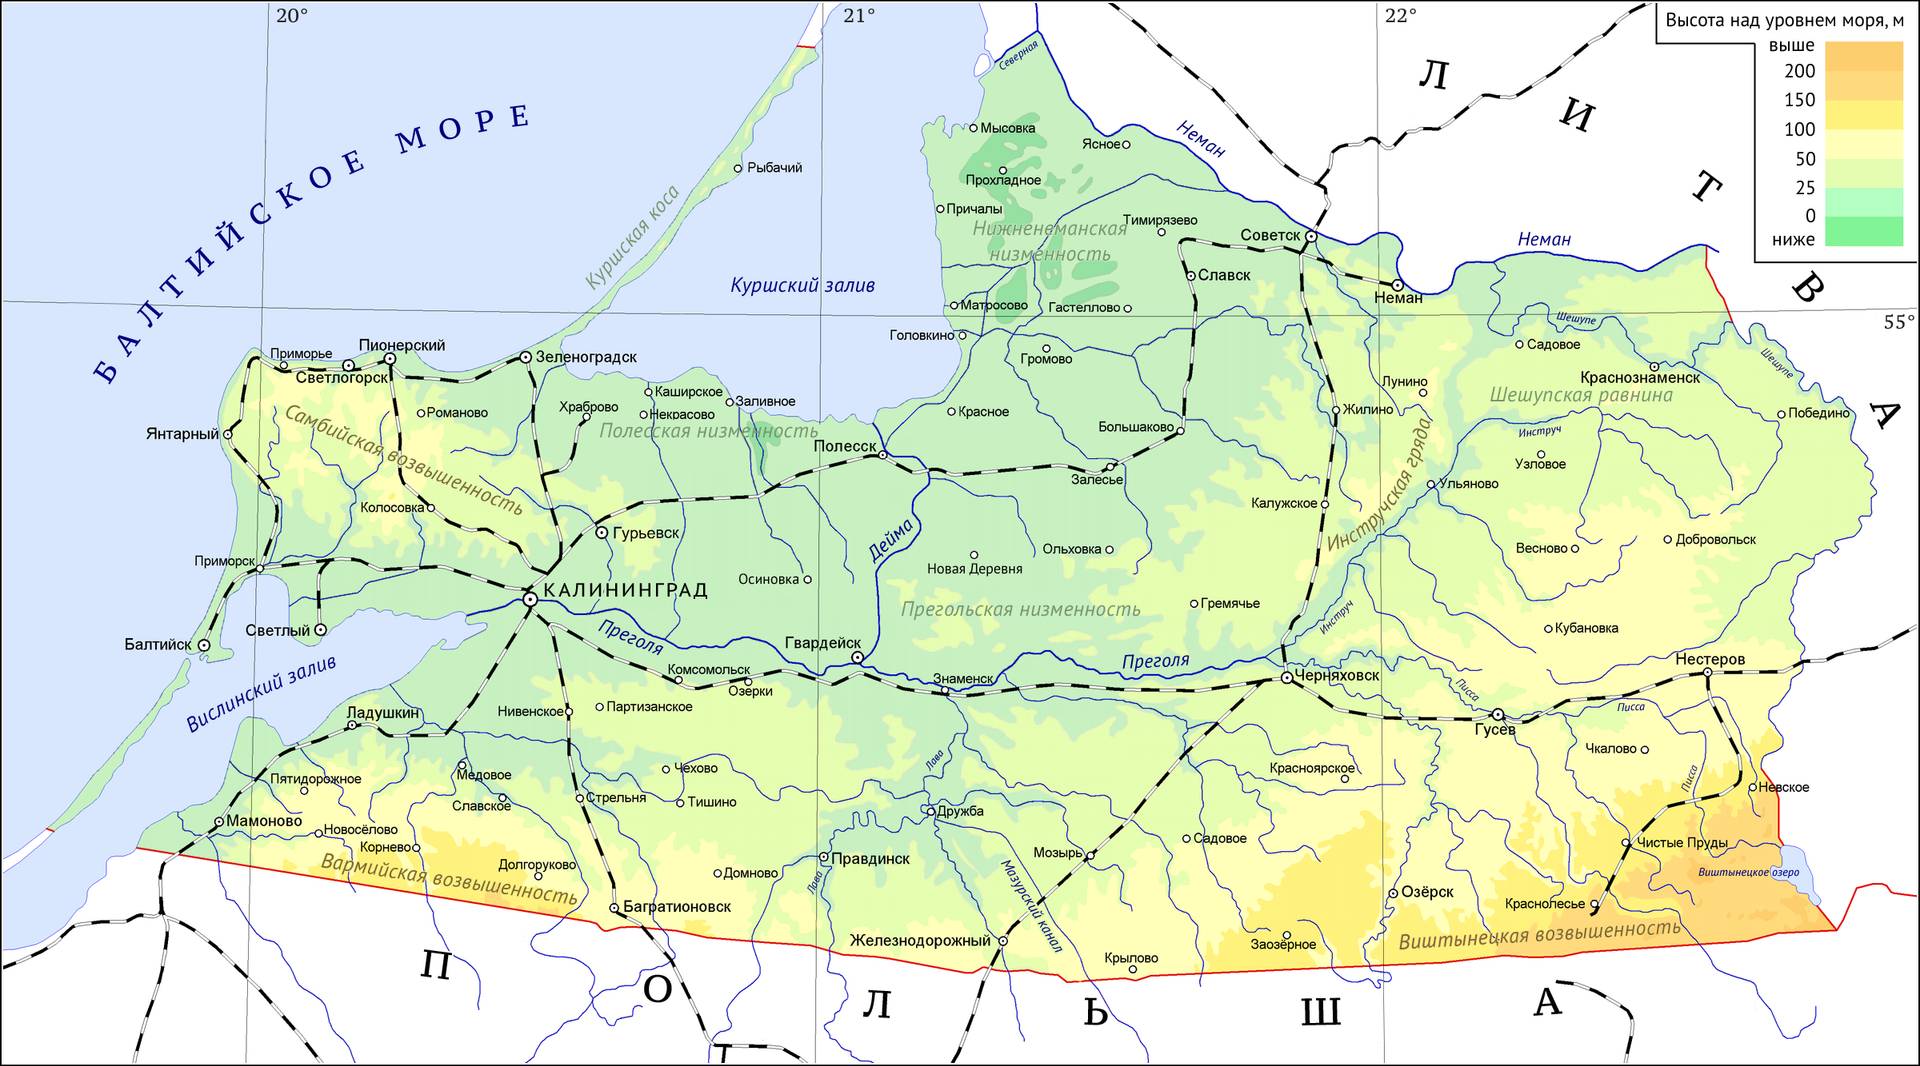 Карта Калининградской области